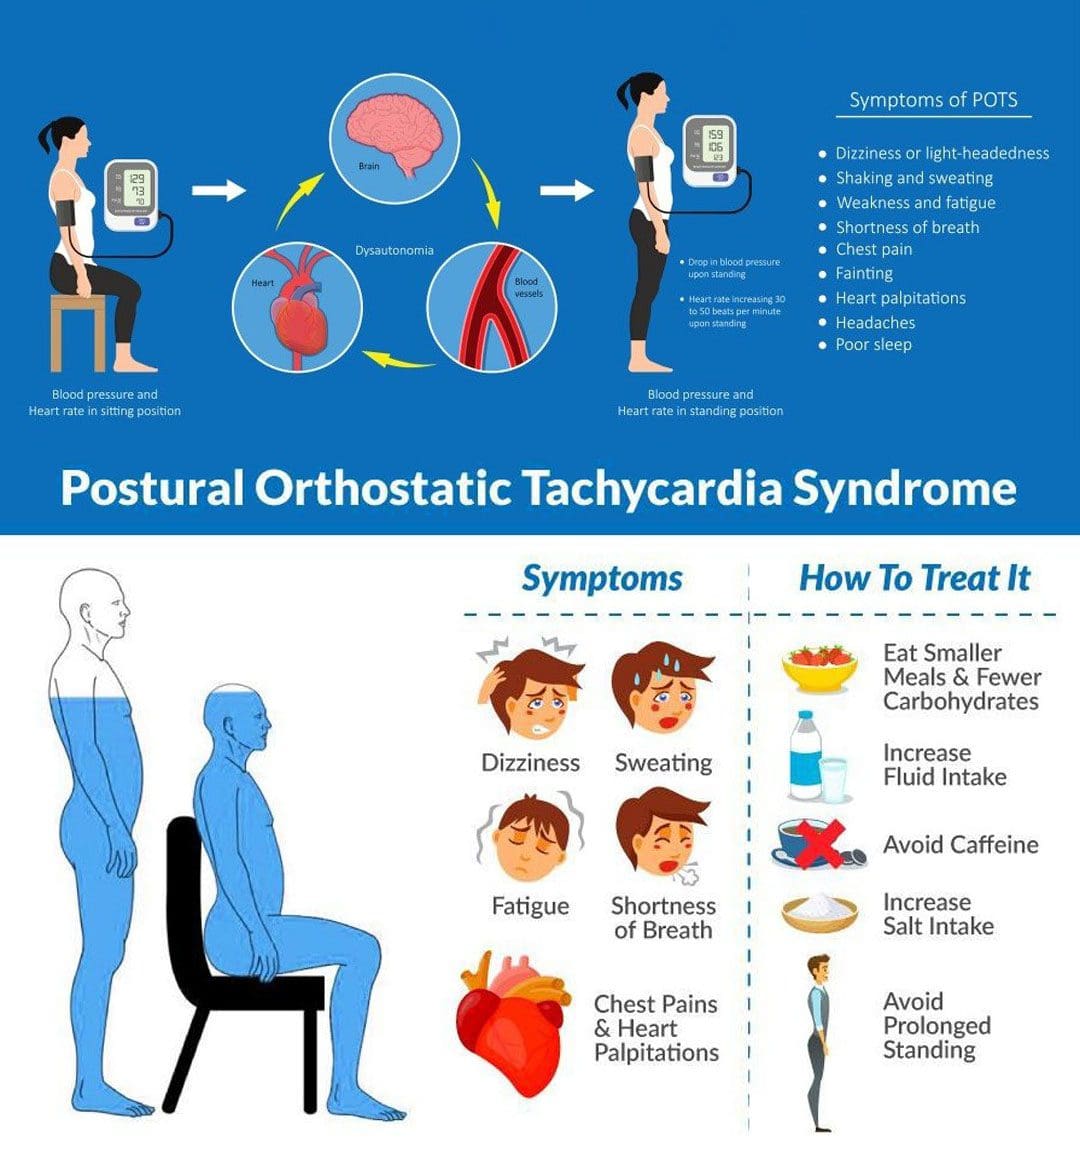 Treating Postural Orthostatic Tachycardia Syndrome